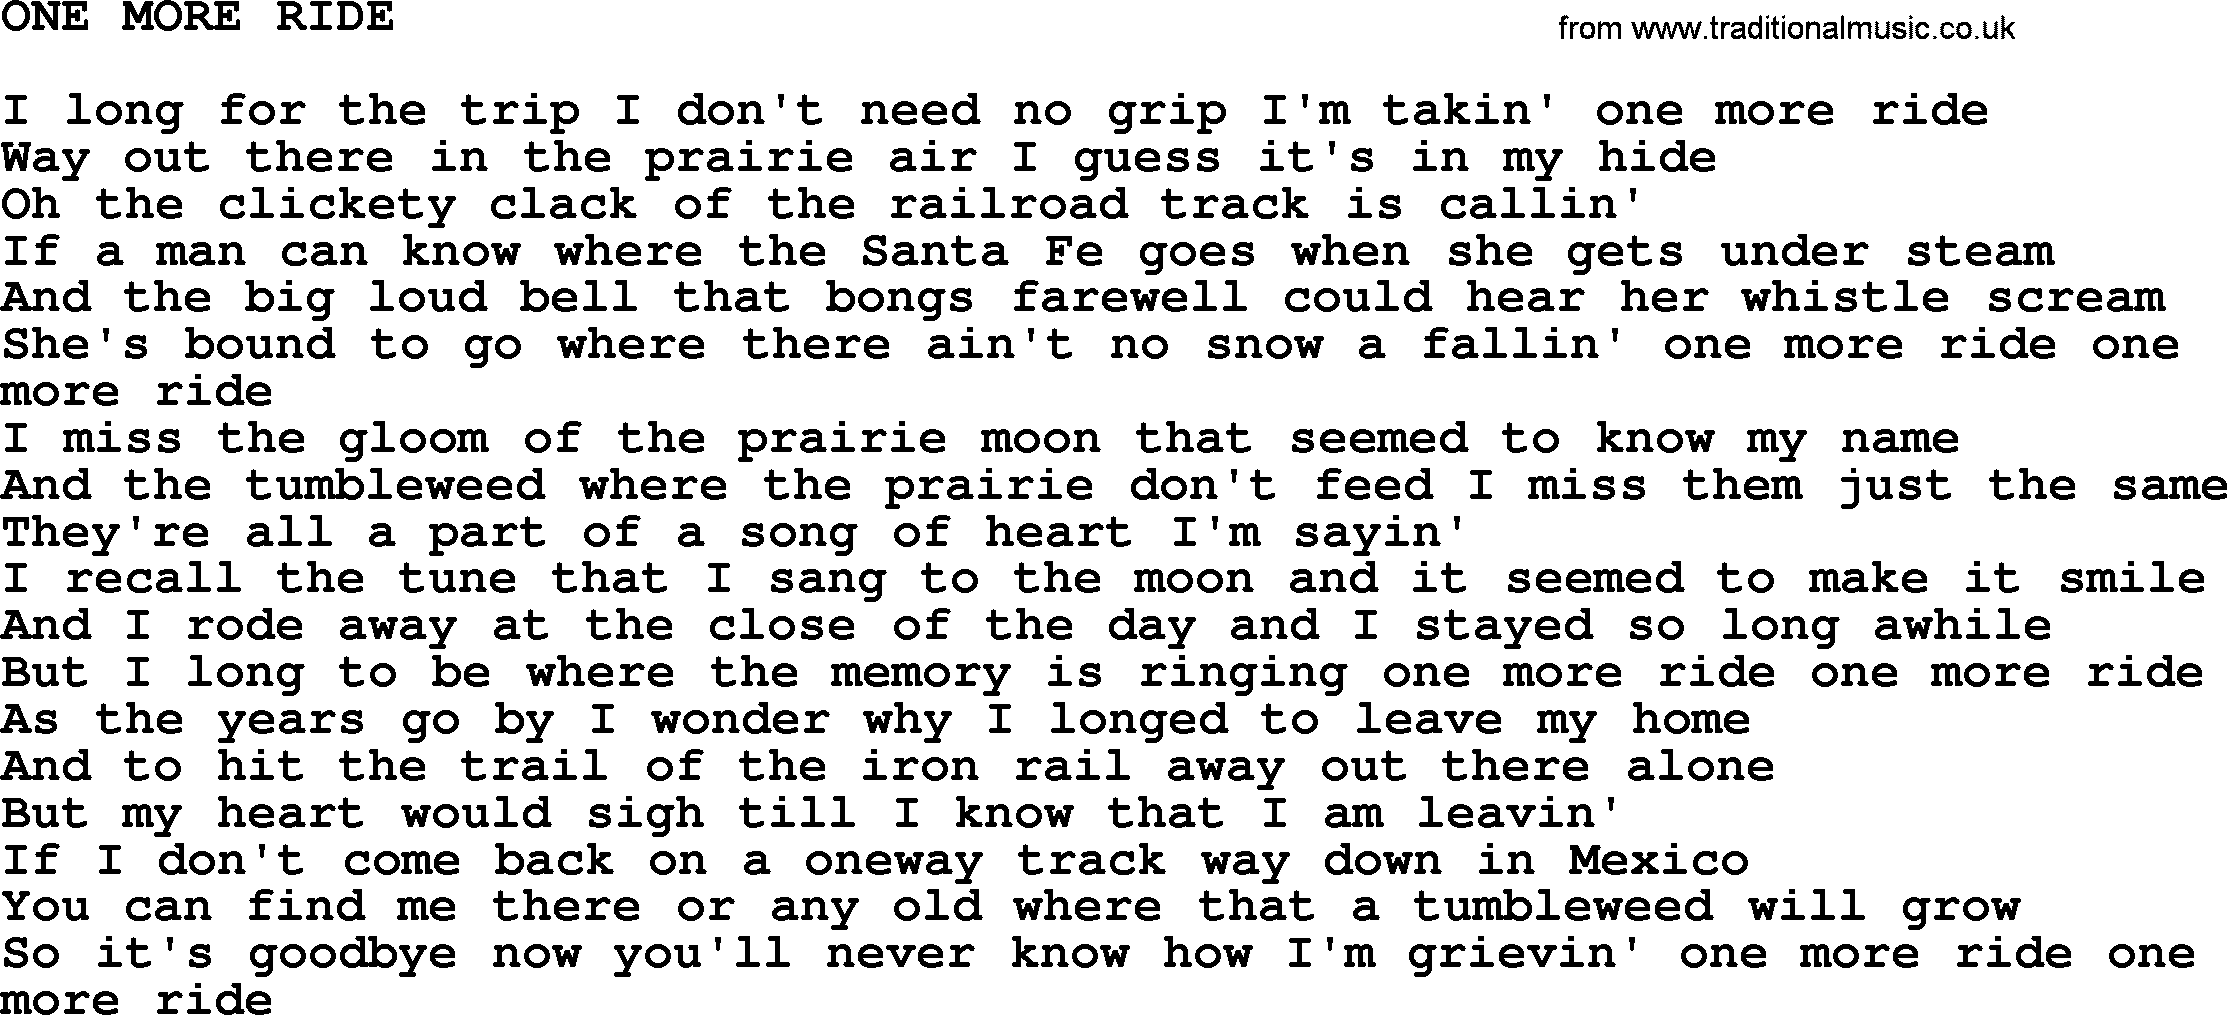 Johnny Cash song One More Ride.txt lyrics